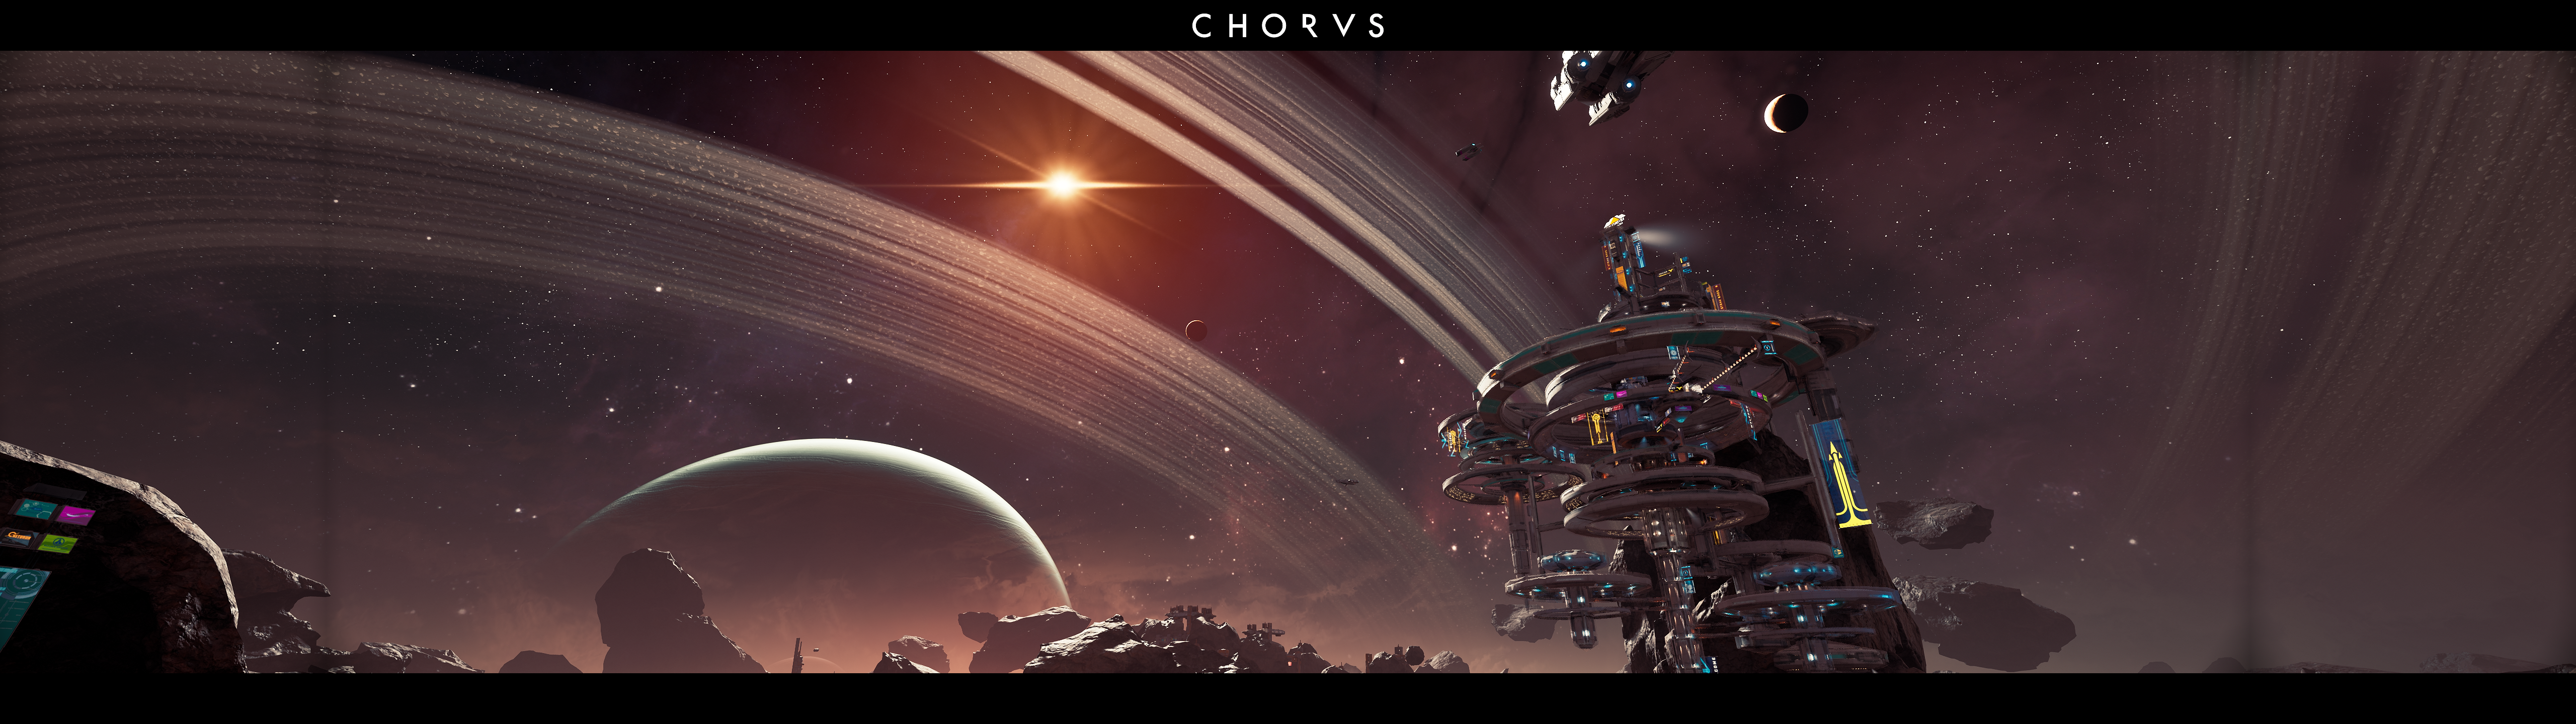 Chorus Unreal Engine 4 Video Games Space Battle Ultrawide Screen Shot Stars Video Game Art 5120x1440